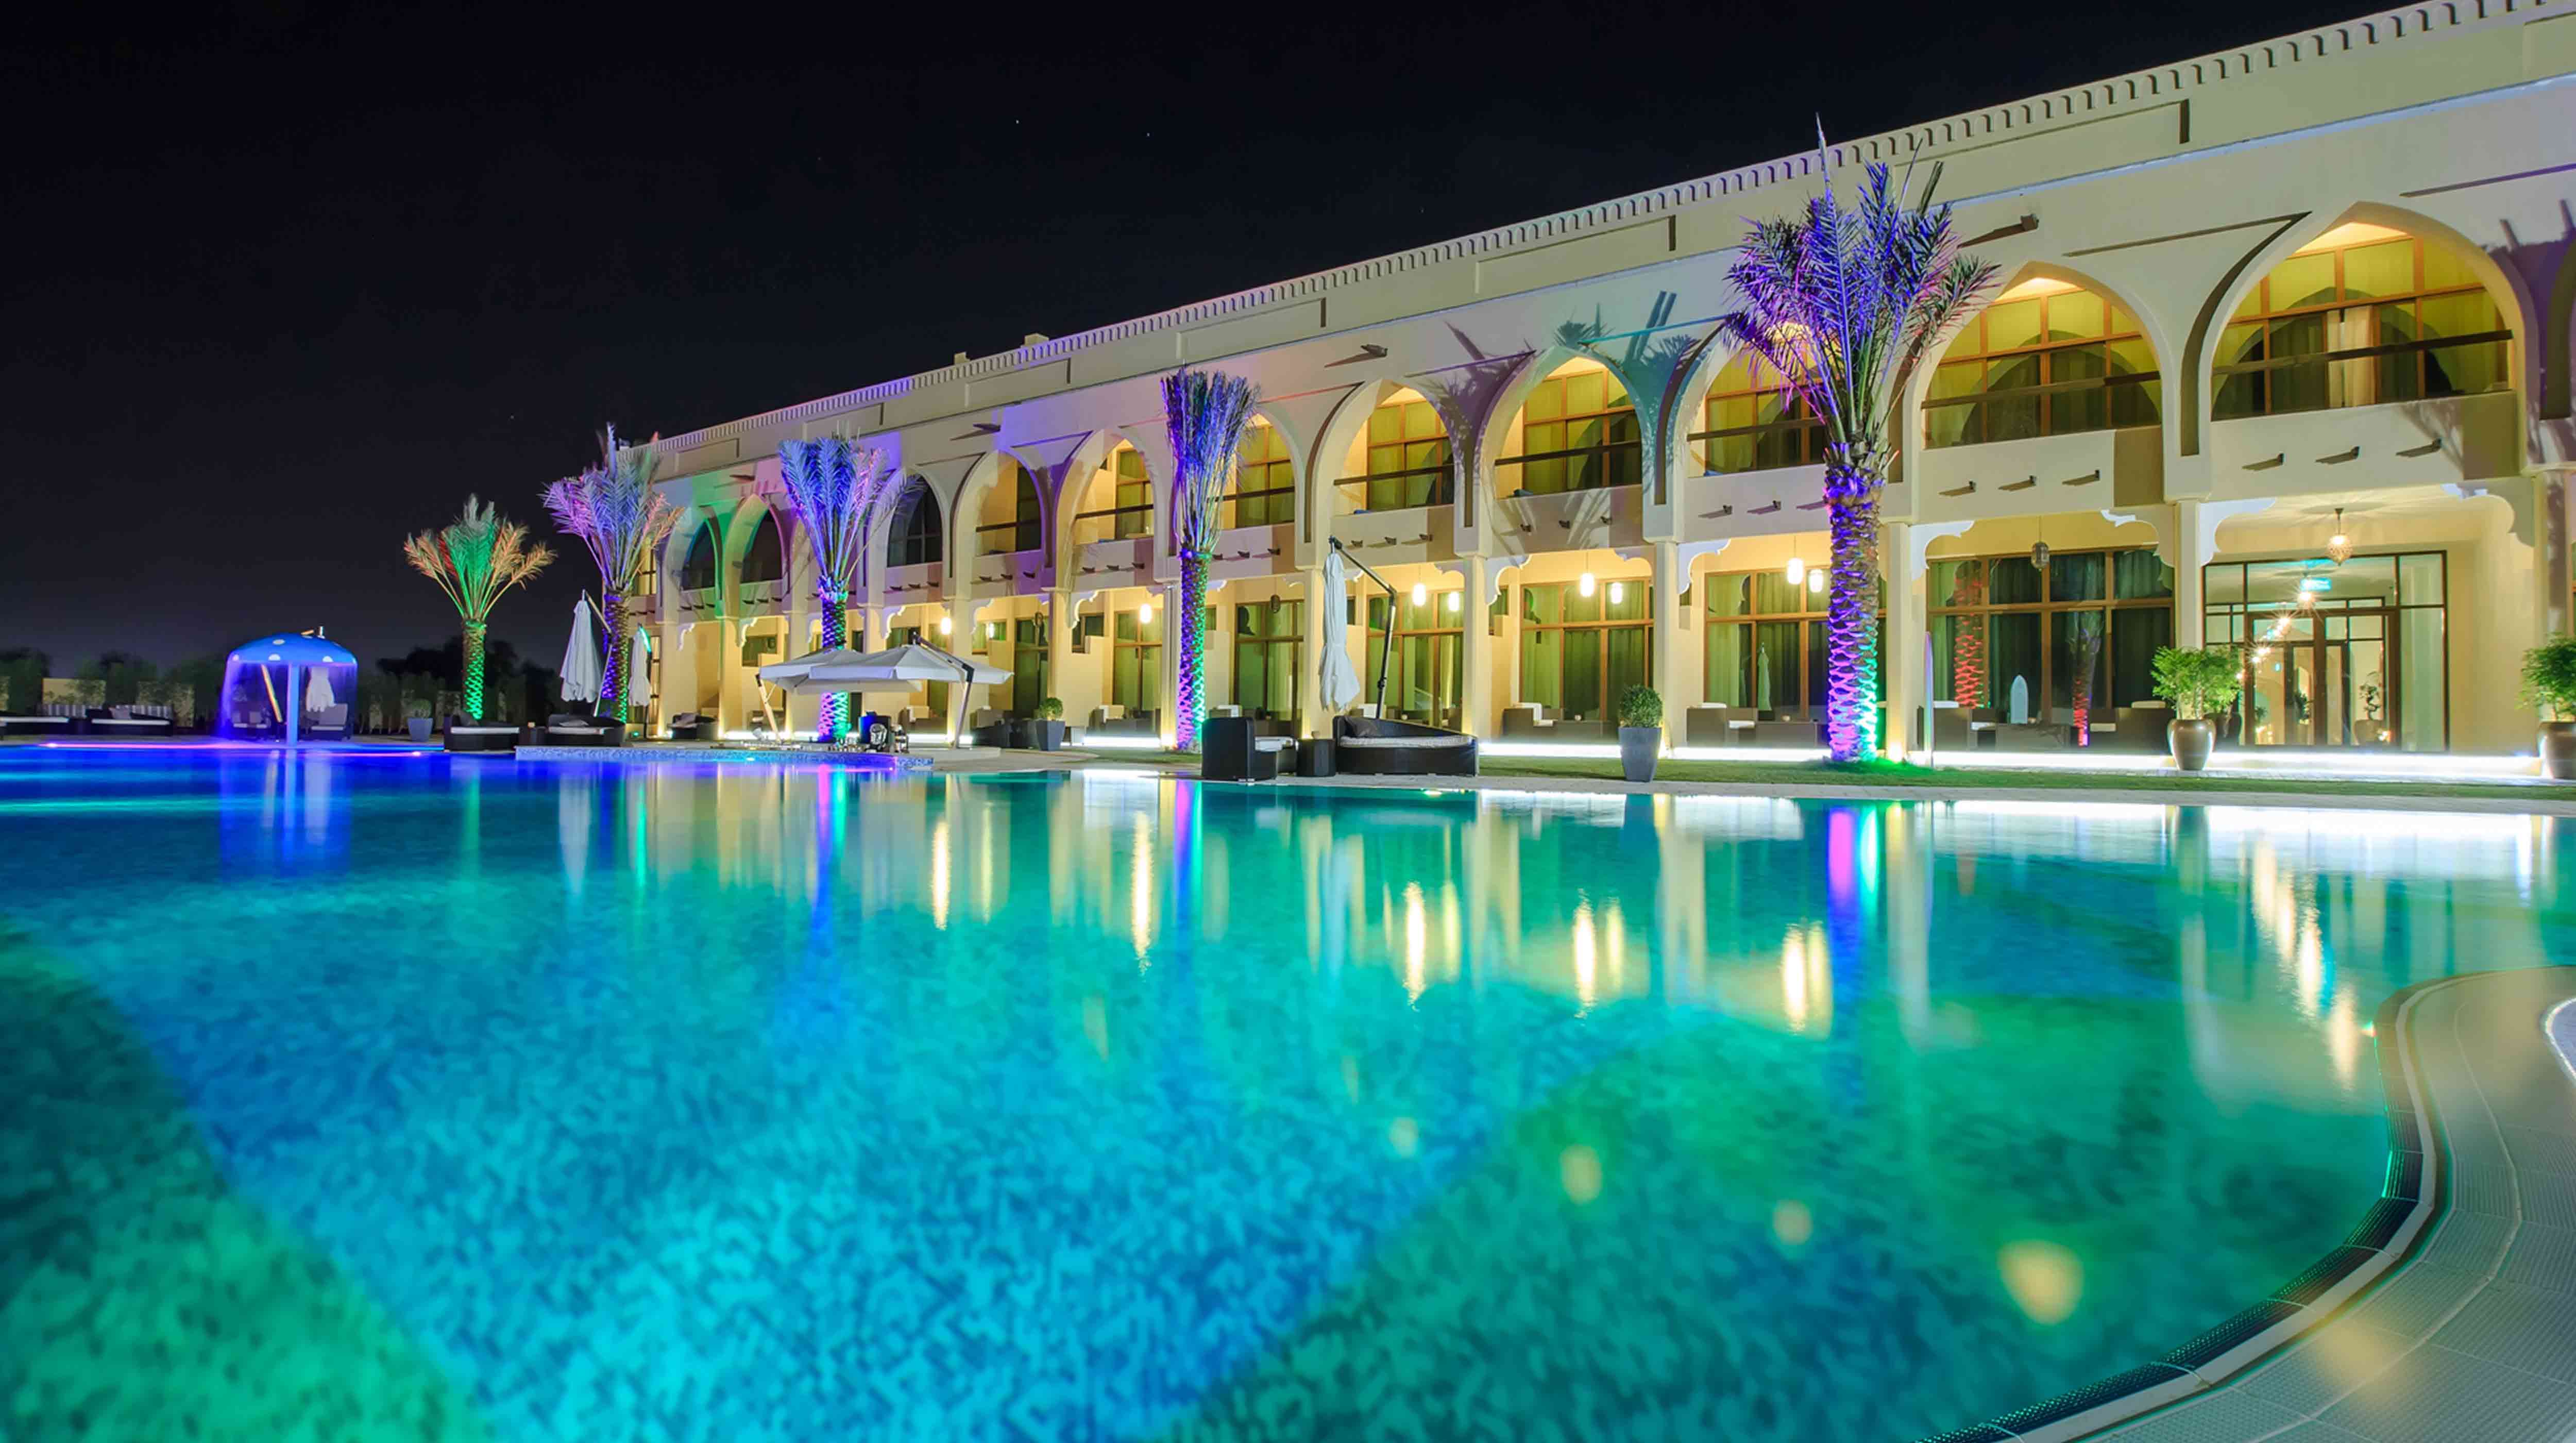 Western Hotel Madinat Zayed